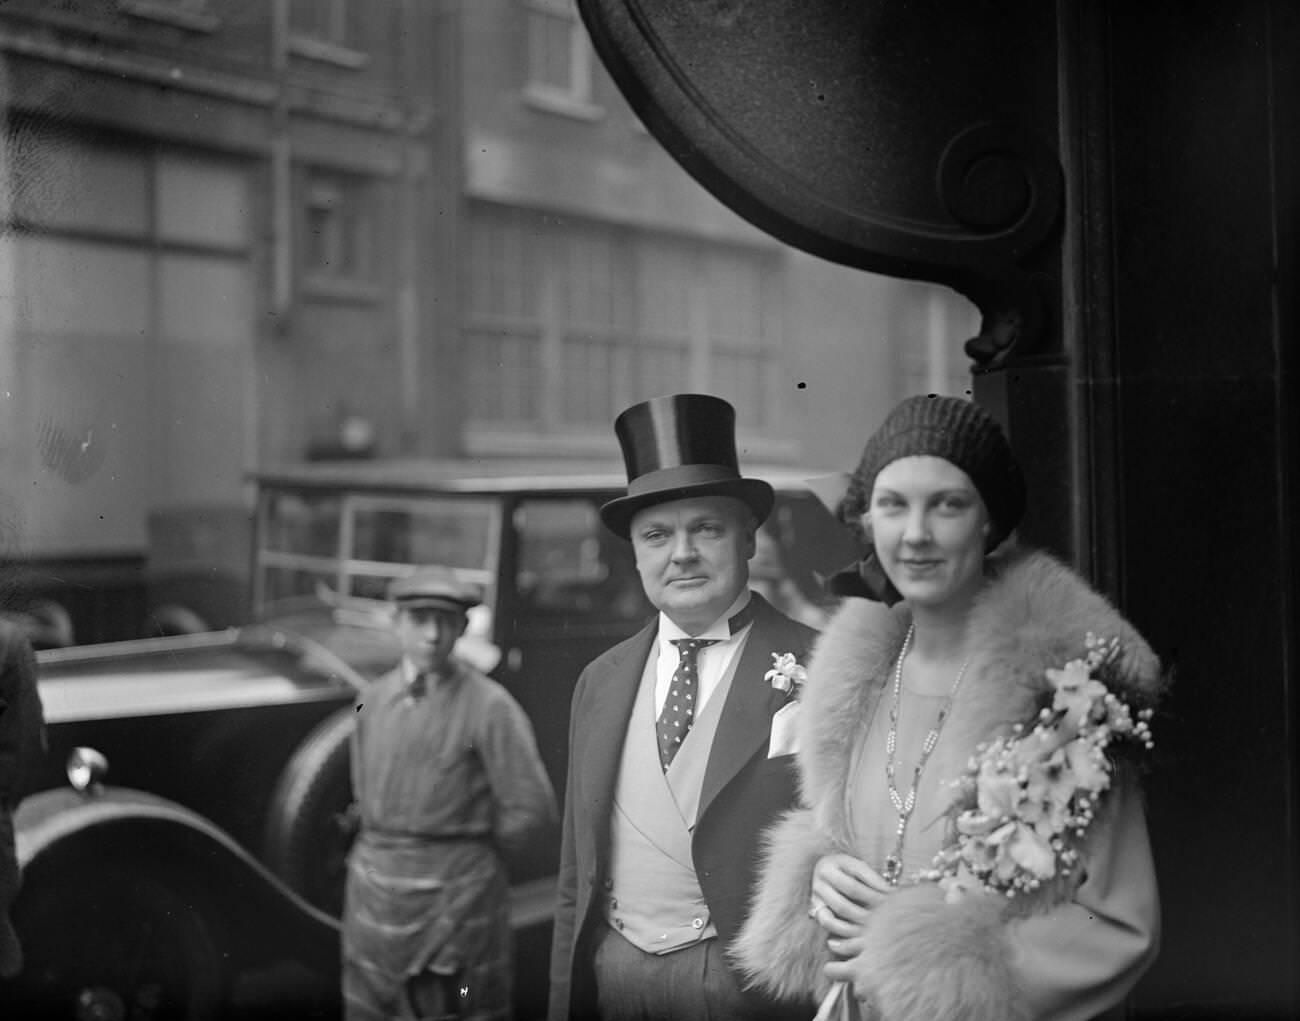 Dudley Field Malone Marries Edna Louise Johnson, Brooklyn, January 29, 1930